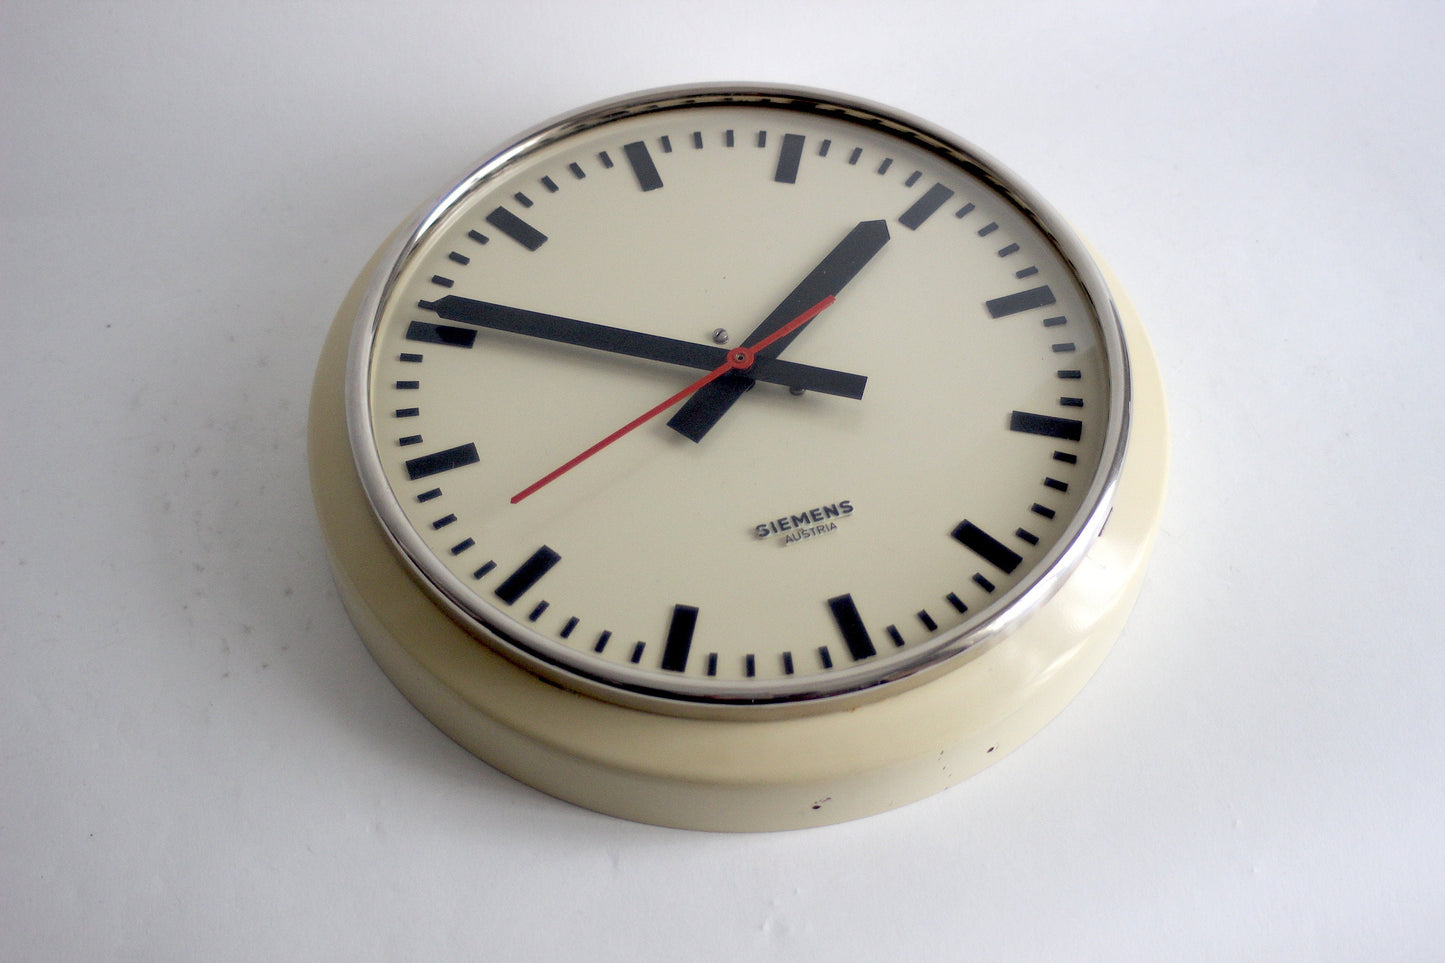 SIEMENS AUSTRIA factory / workshop wall clock. Austria 1950s. Completely original and serviced